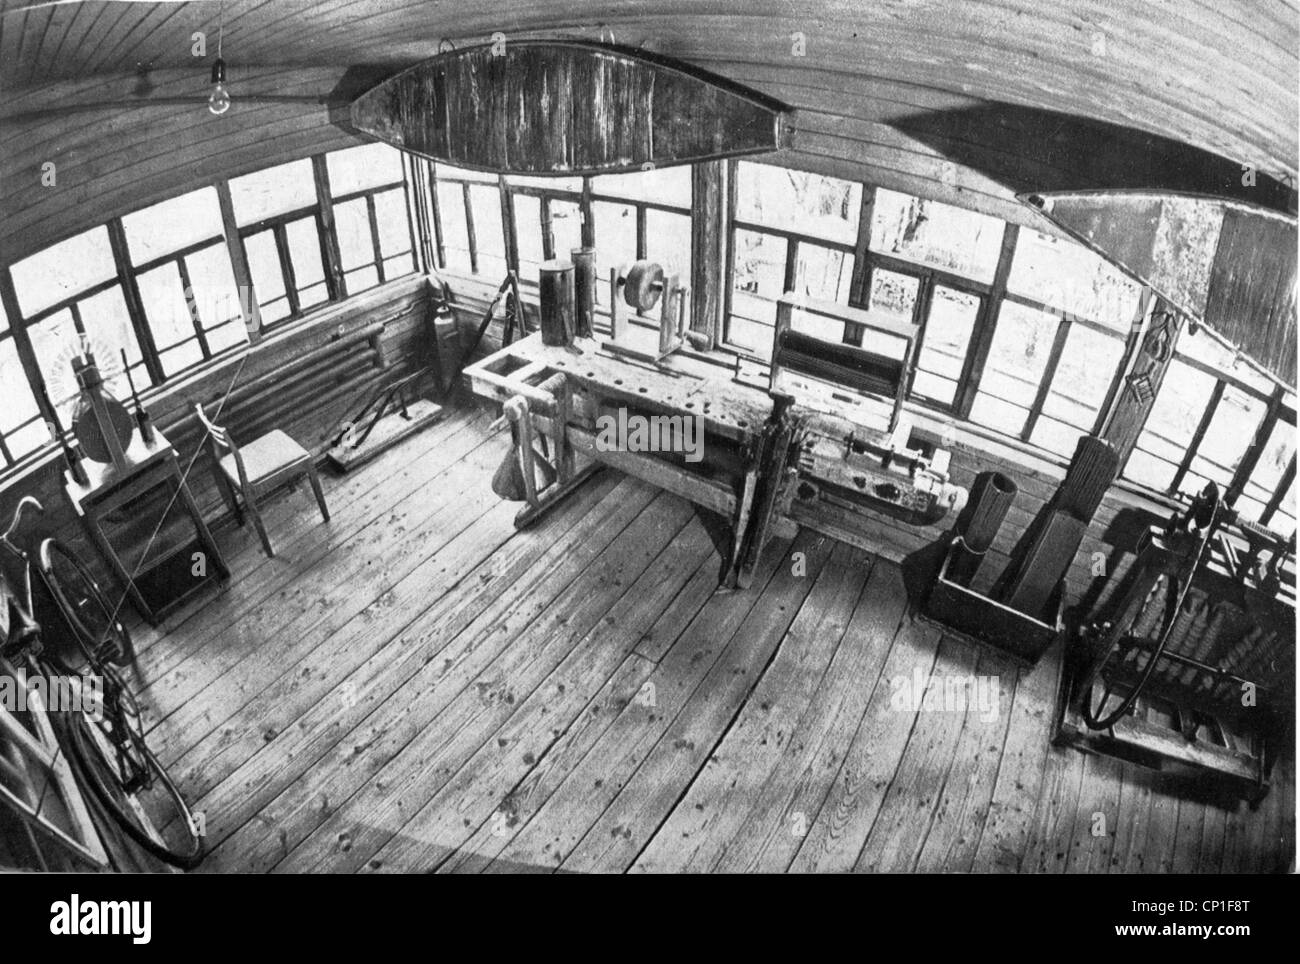 Tsiolkovskii, Konstantin Eduardovich, 17.9.1857 - 19.9.1935, Russian physicist, mathematician, his workshop, Stock Photo